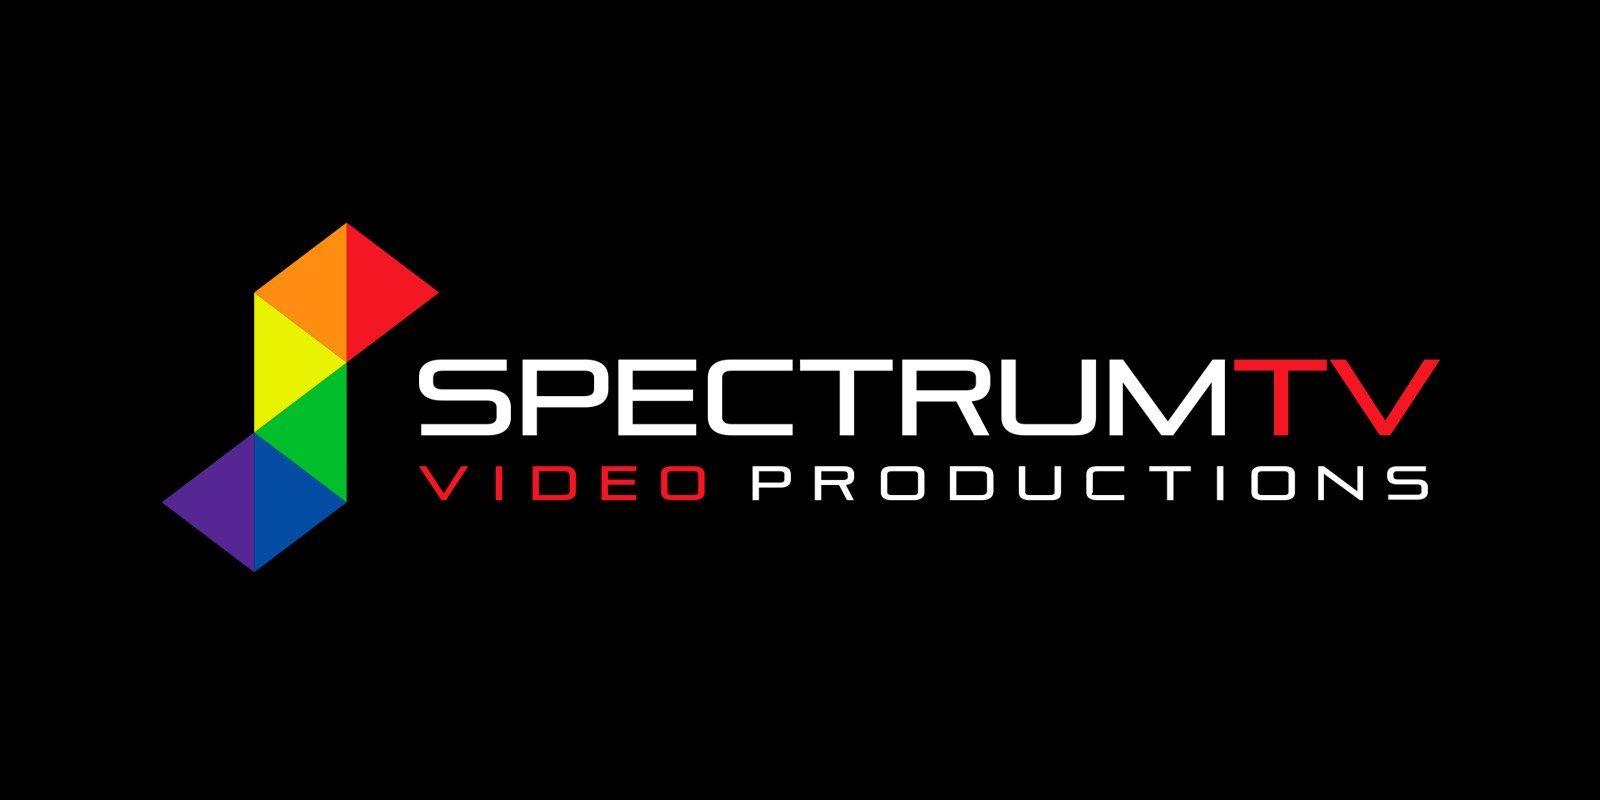 Spectrum TV Logo - Spectrum TV Video Productions Logo - Spectrum TV Video Productions ...